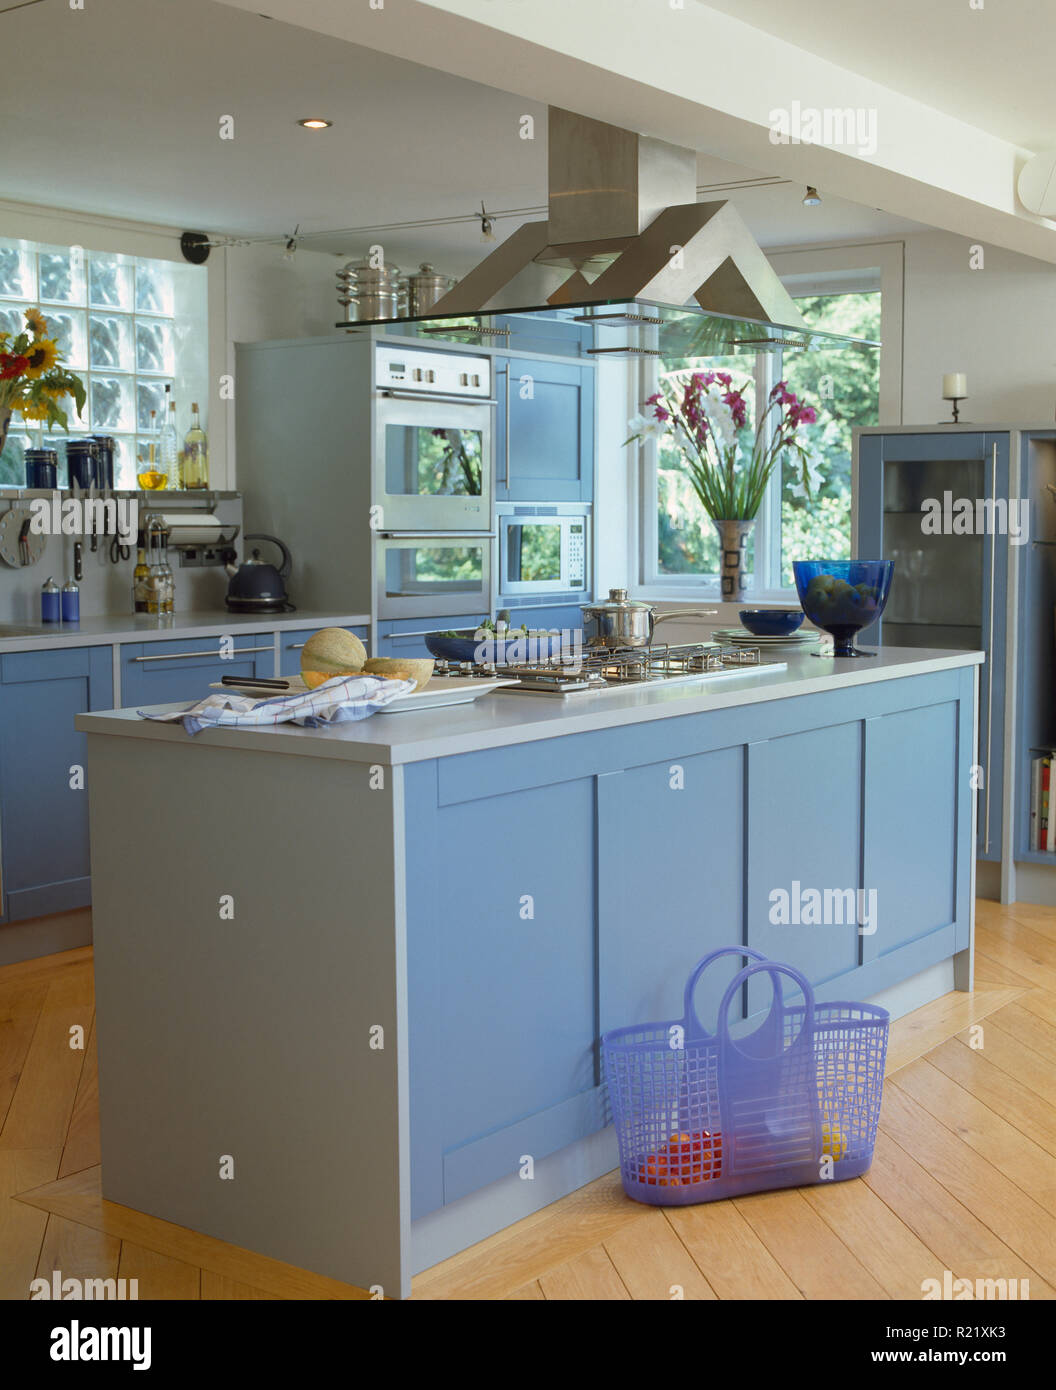 Pale blue doors on island unit in modern kitchen Stock Photo